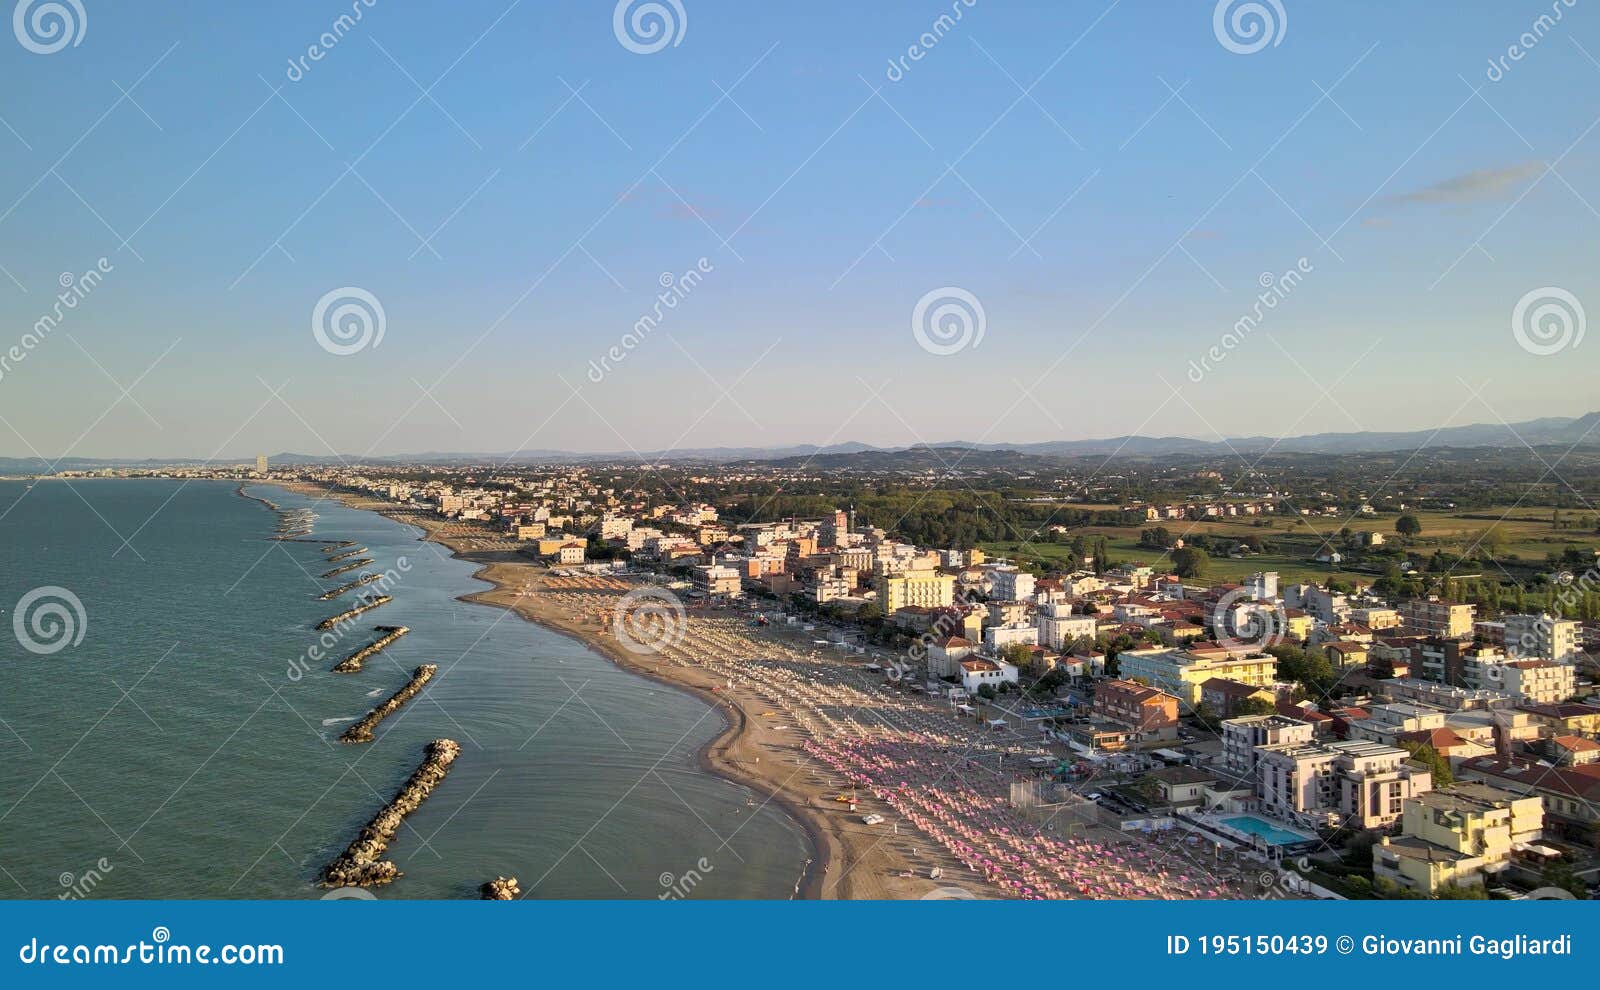 torre pedrera beach, rimini. aerial view from drone in summer season